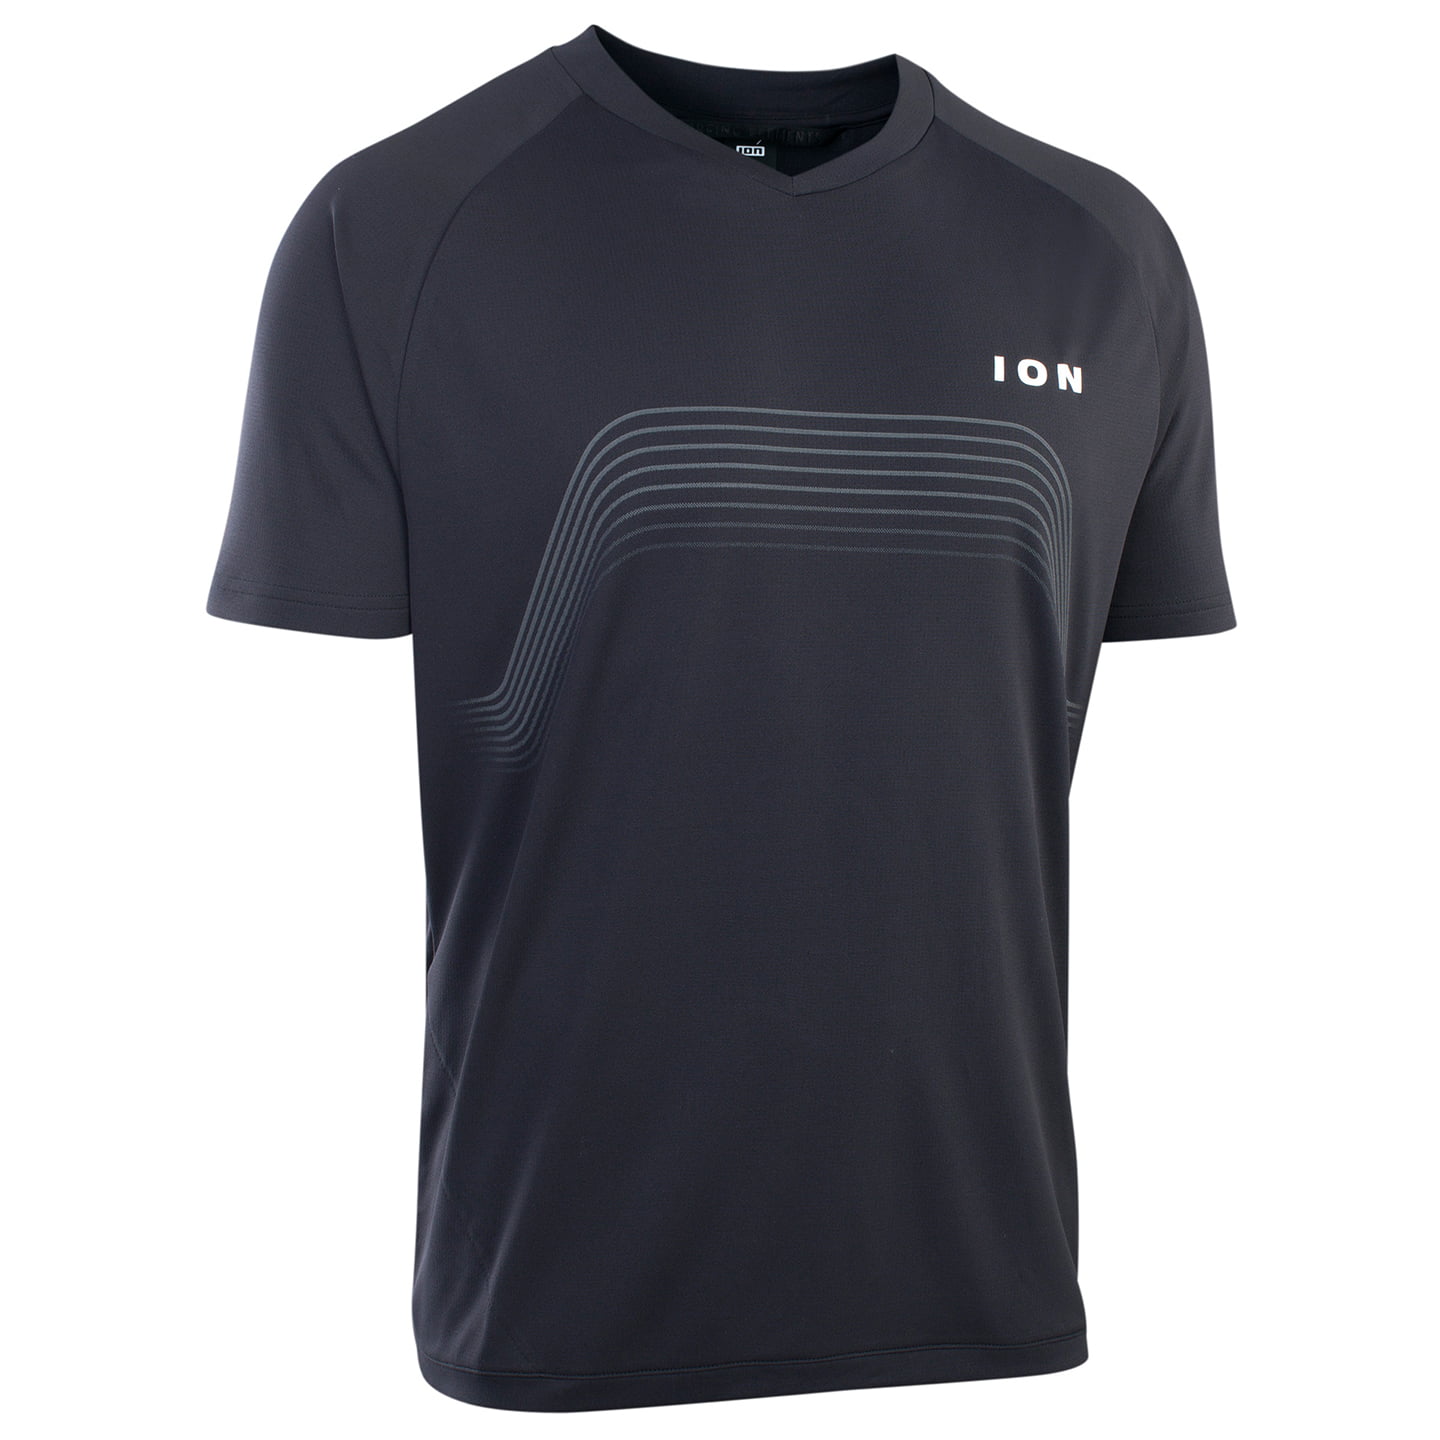 ION Traze Bike Shirt, for men, size L, Cycling jersey, Cycling clothing